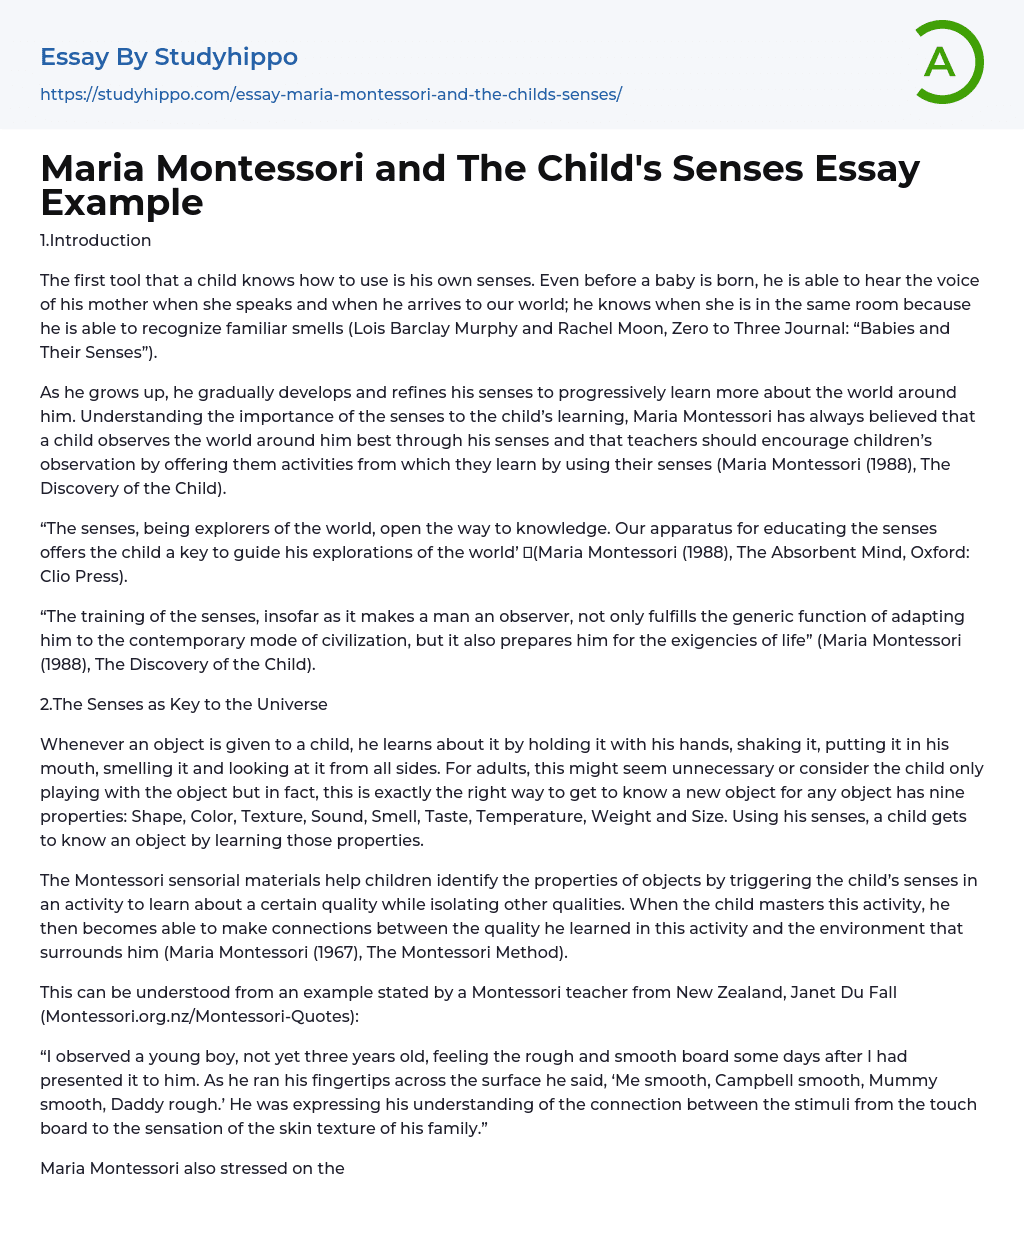 Maria Montessori and The Child’s Senses Essay Example